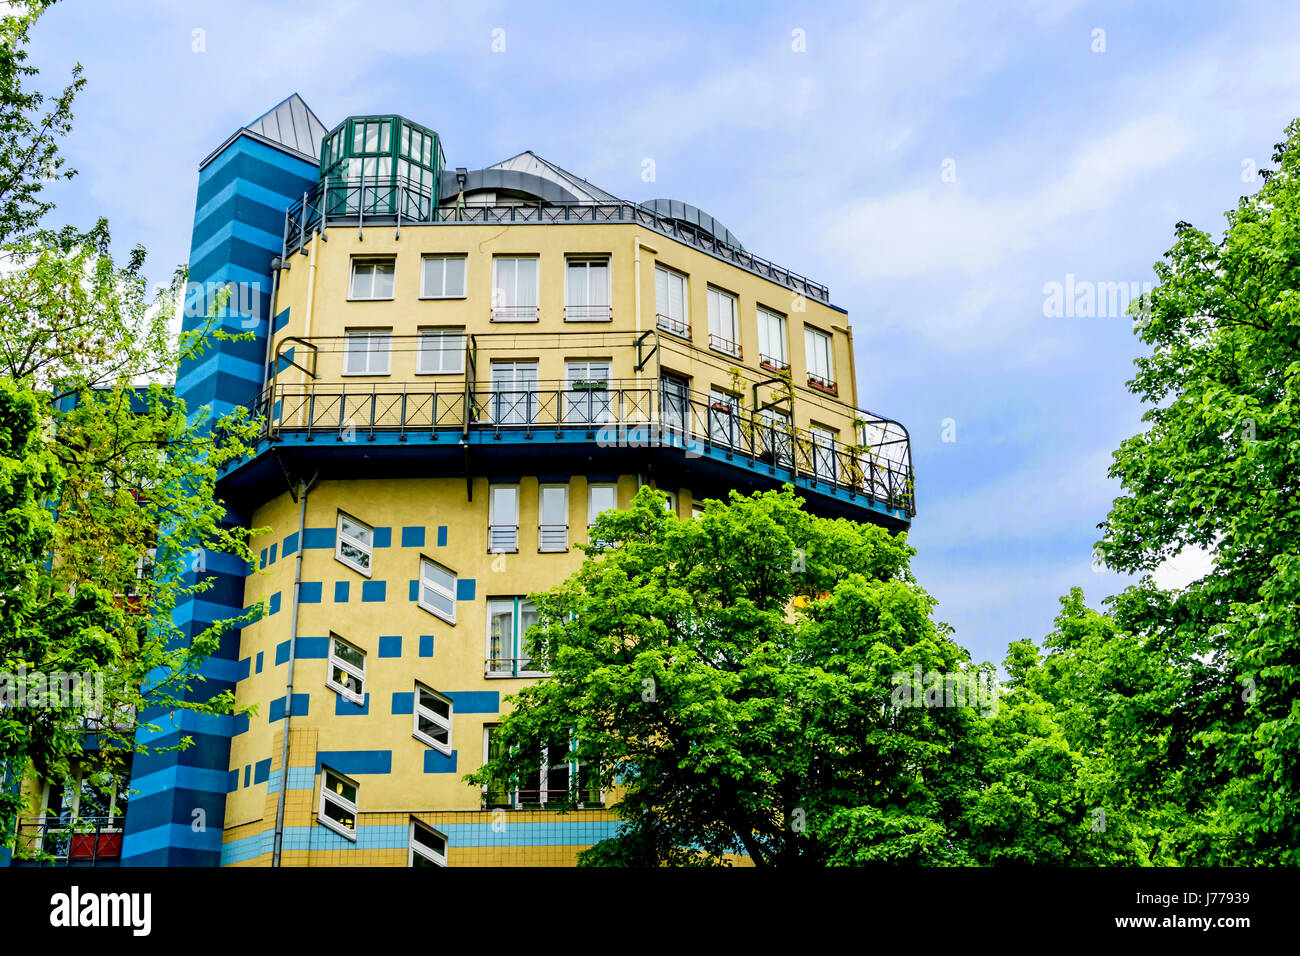 Wohnhäuser in Berlin Wilmersdorf; mansion blocks in Berlin Stock Photo